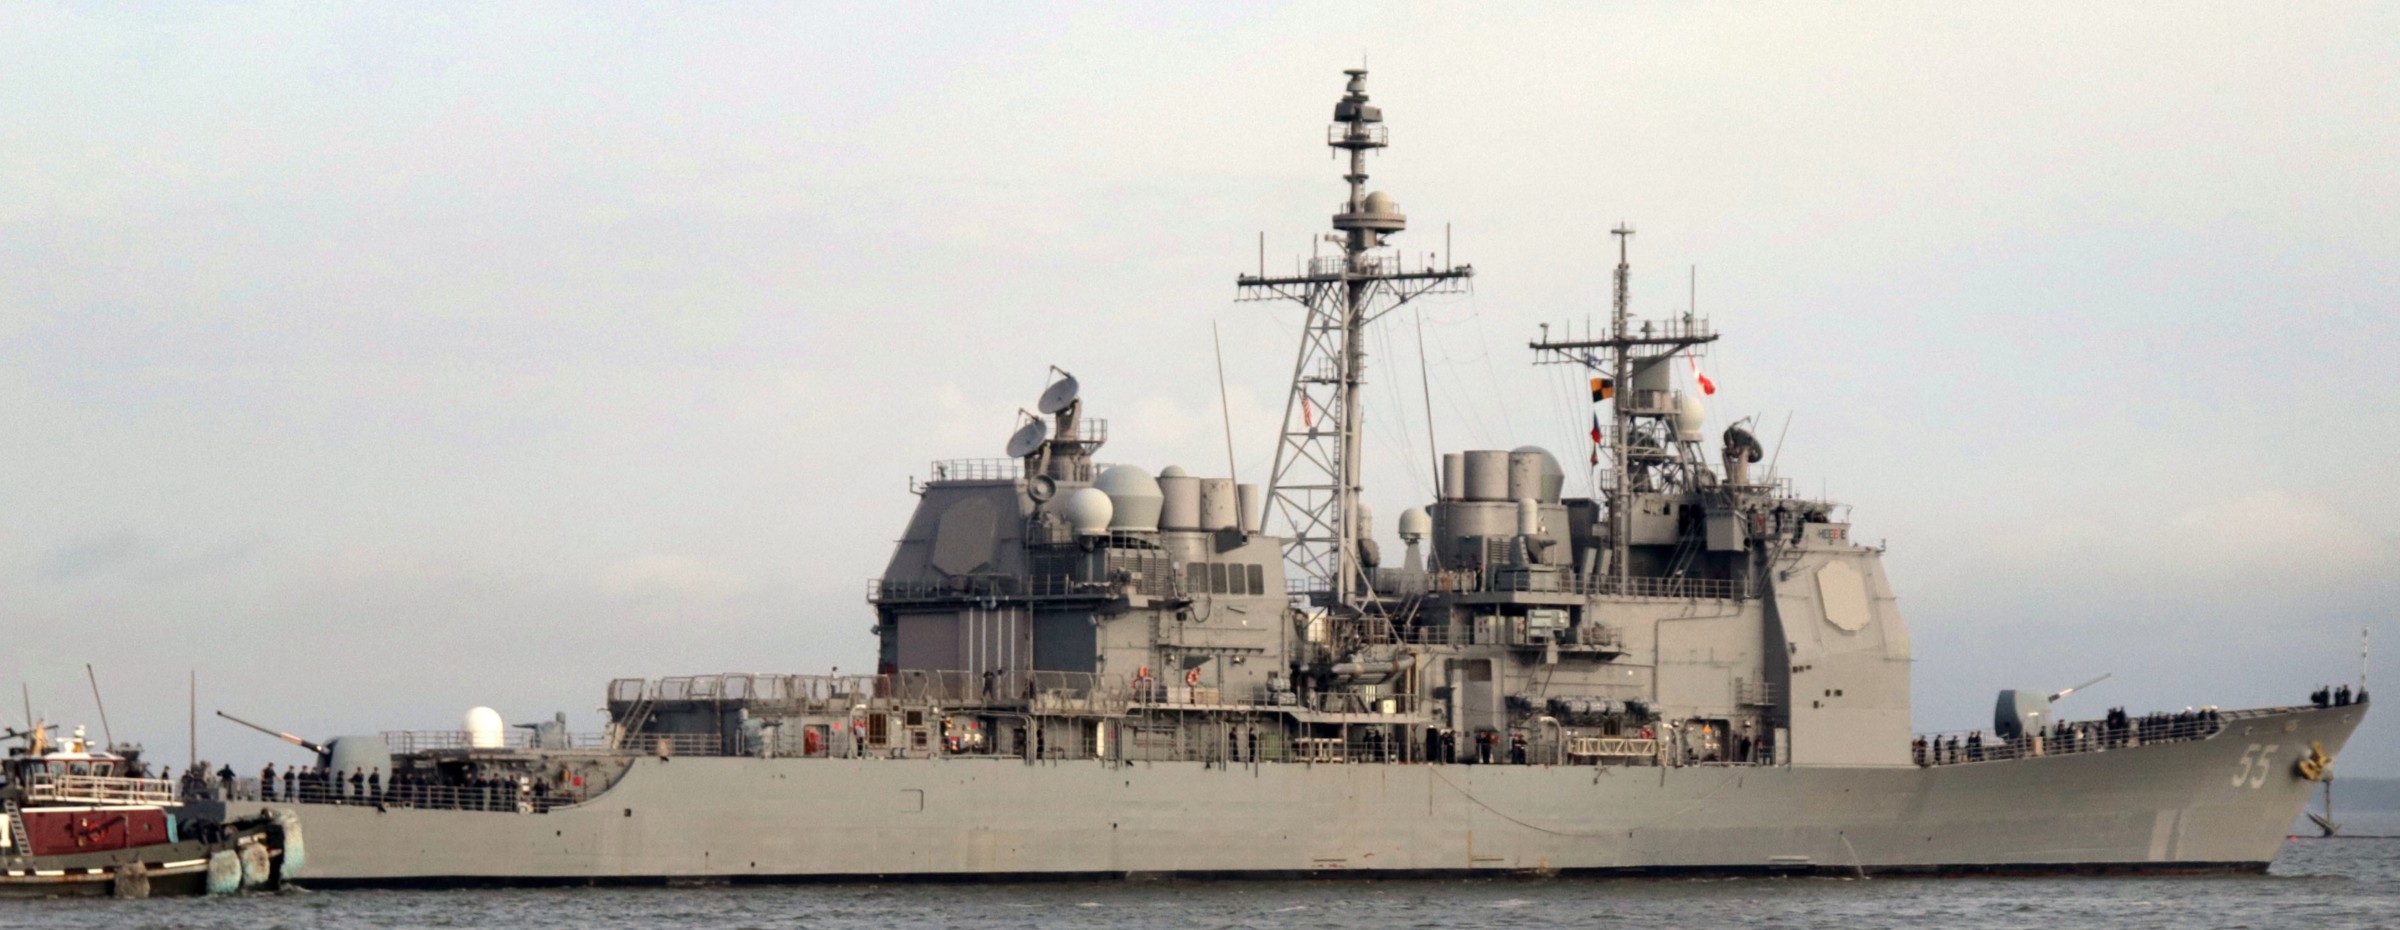 cg-55 uss leyte gulf ticonderoga class guided missile cruiser aegis us navy 56